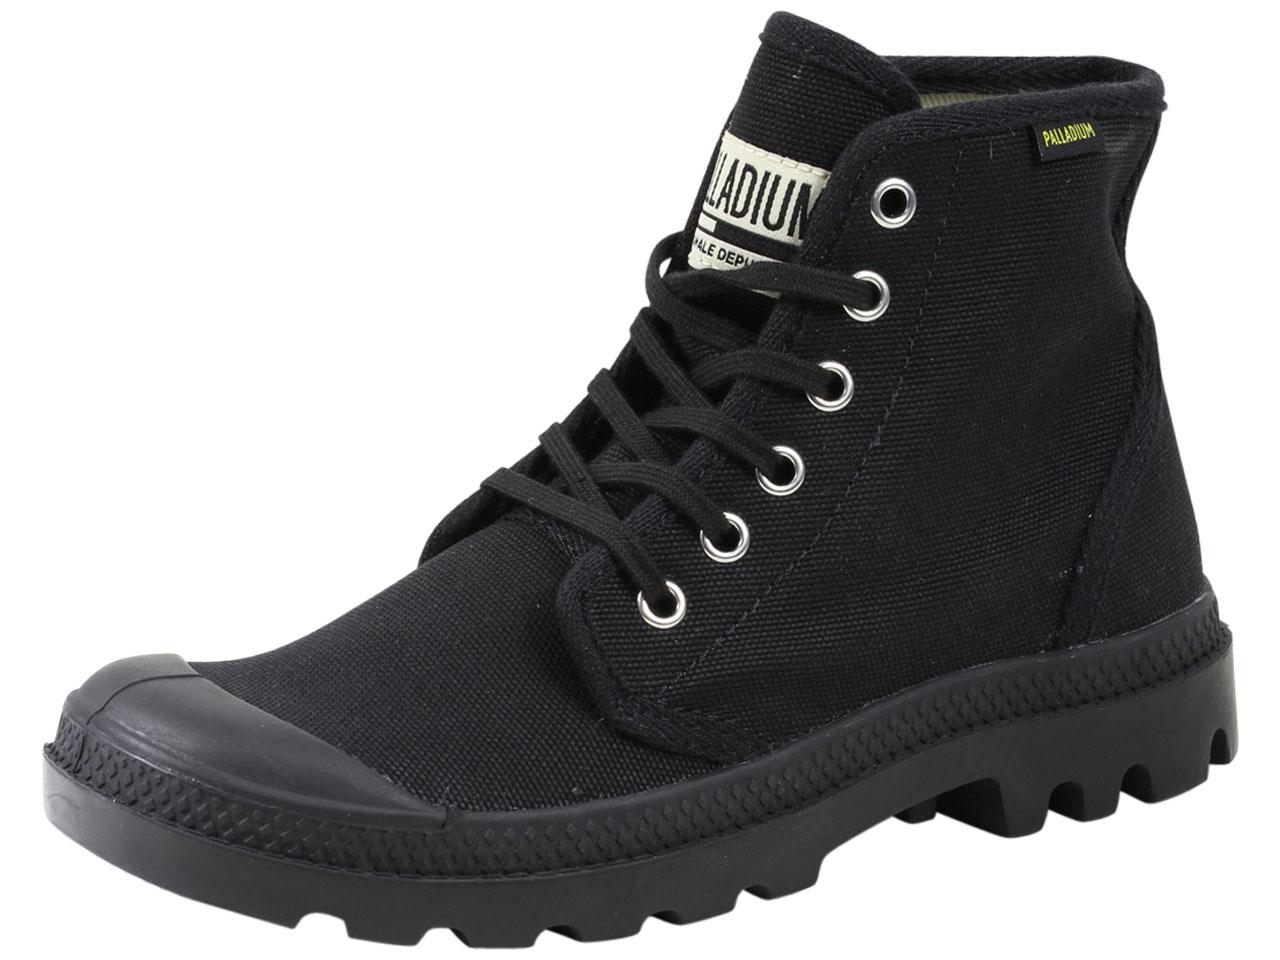 Palladium Men's Pampa Hi Originale Chukka Boots Shoes - Black - 10.5 D(M) US/12 B(M) US